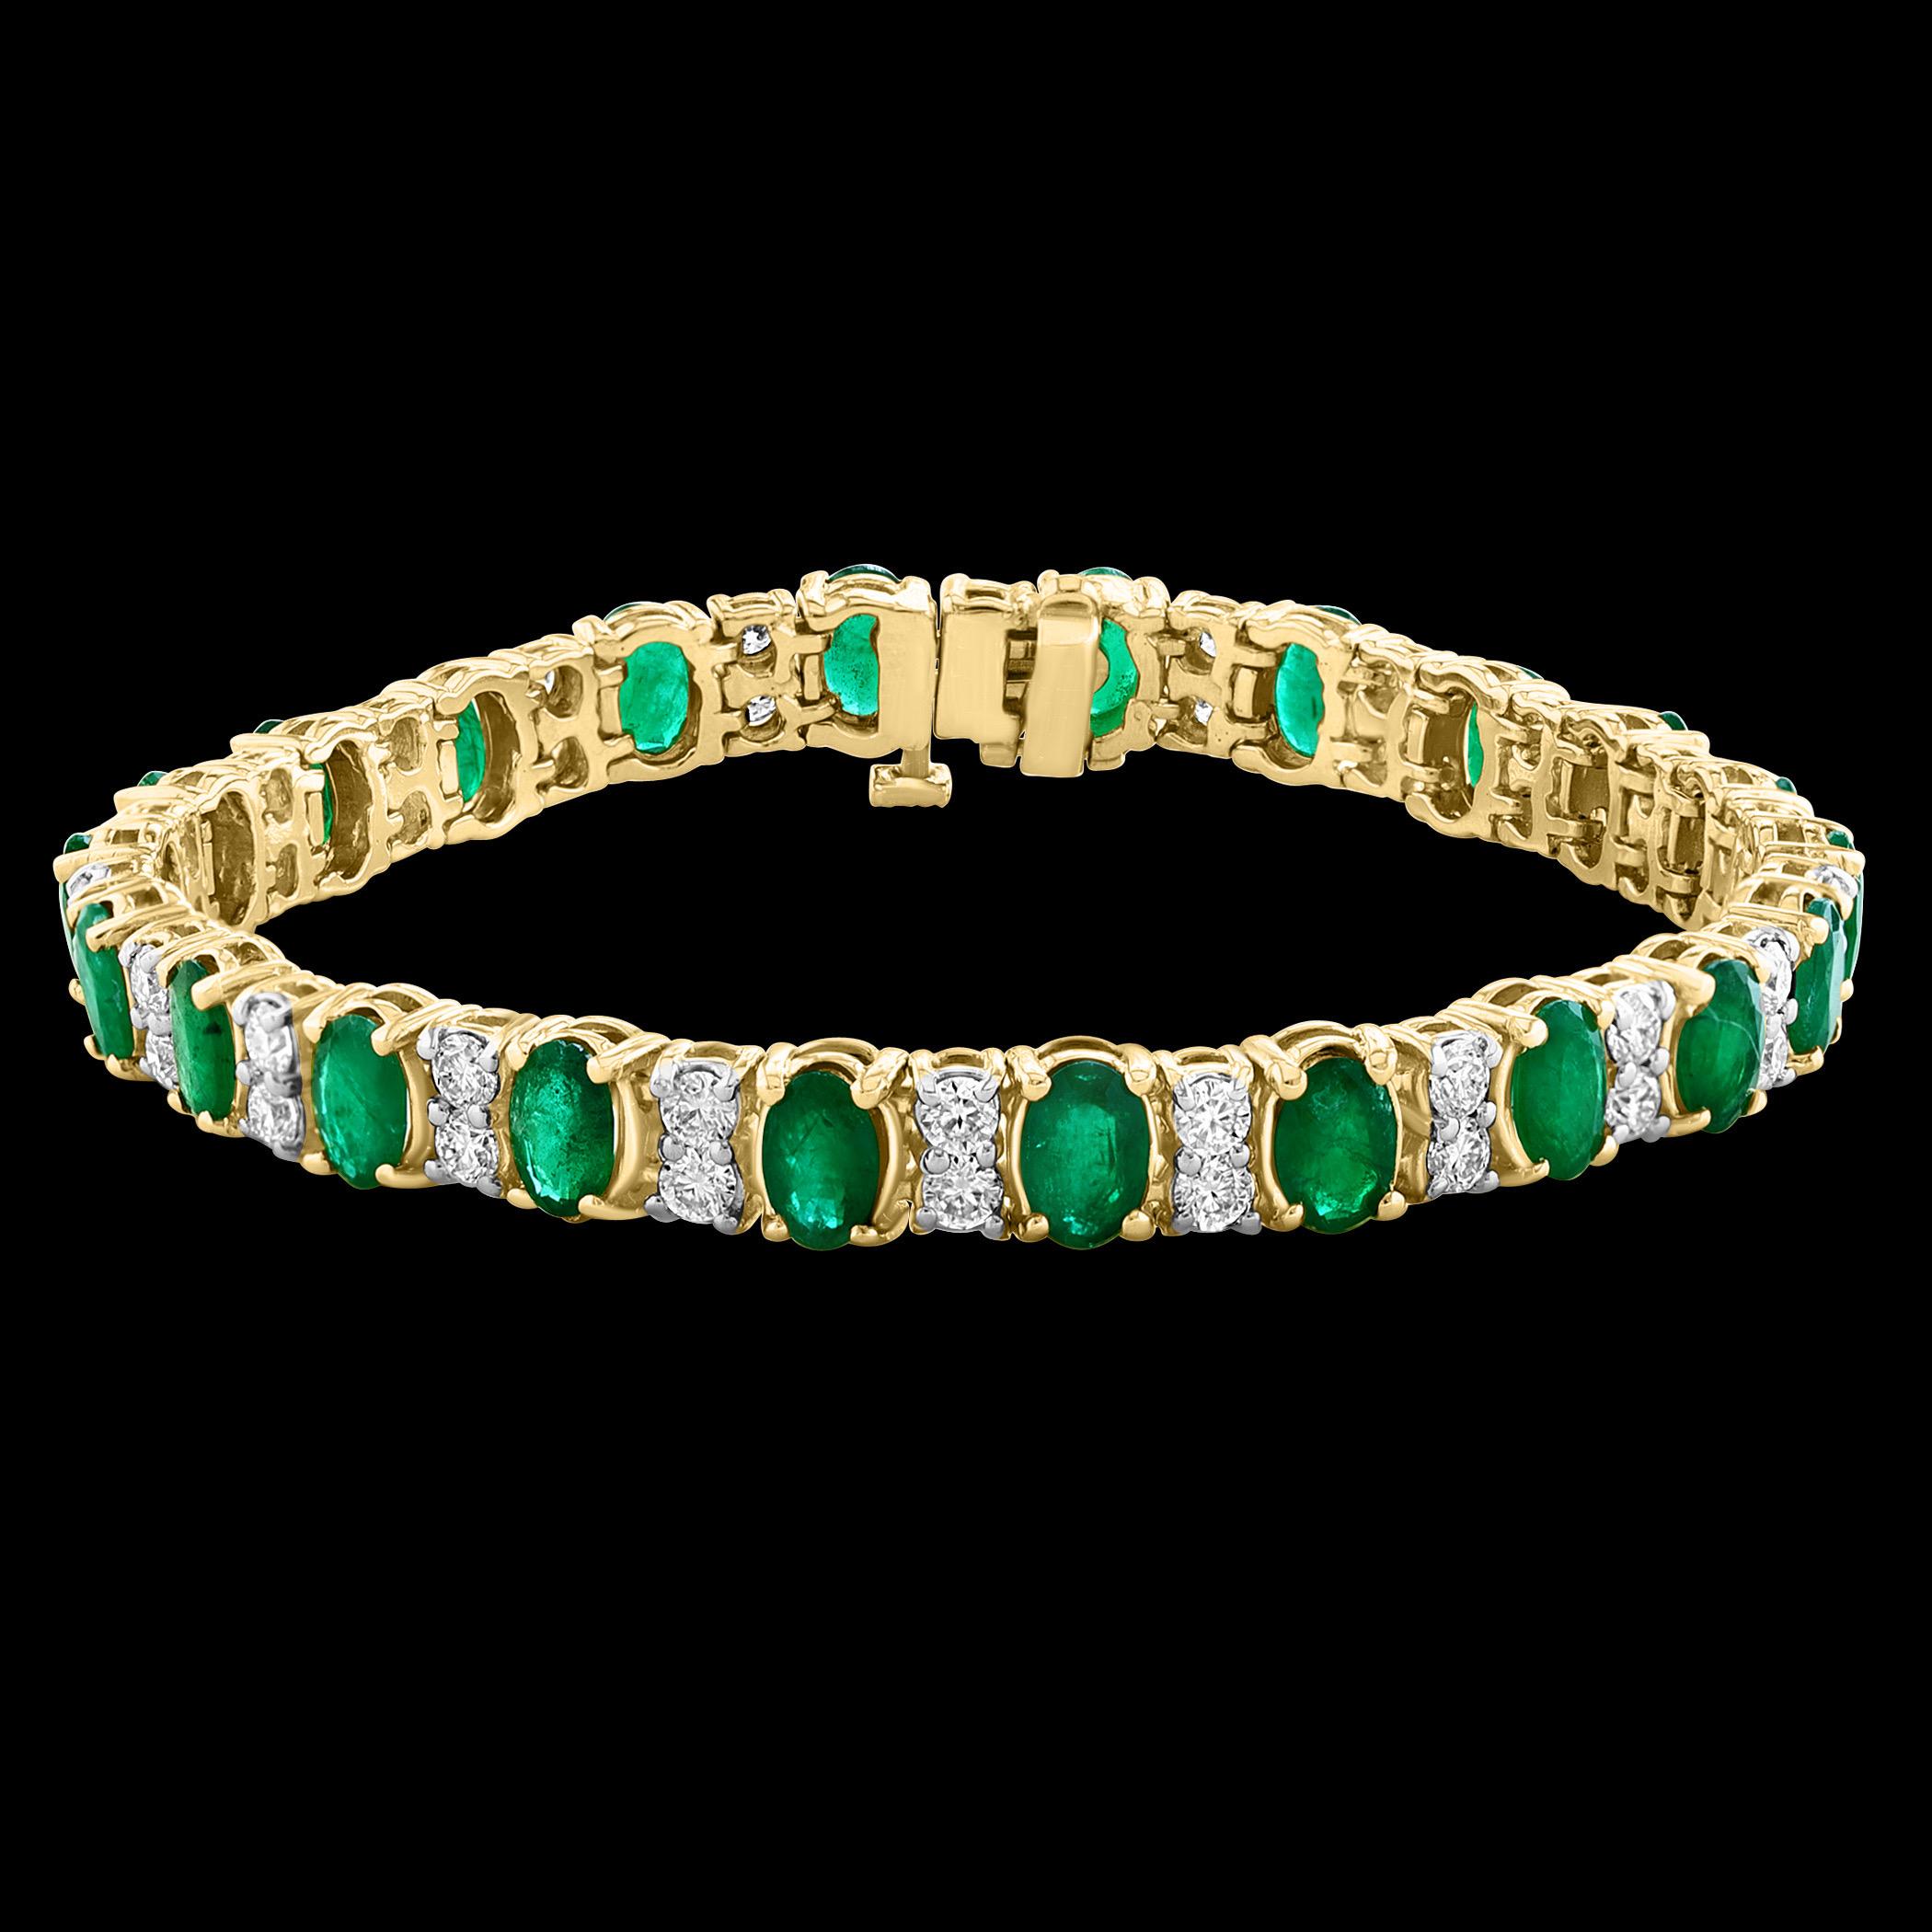 12 Carat Natural Emerald & 2.8 Carat Diamond Tennis Bracelet 14 Kt Yellow Gold For Sale 7